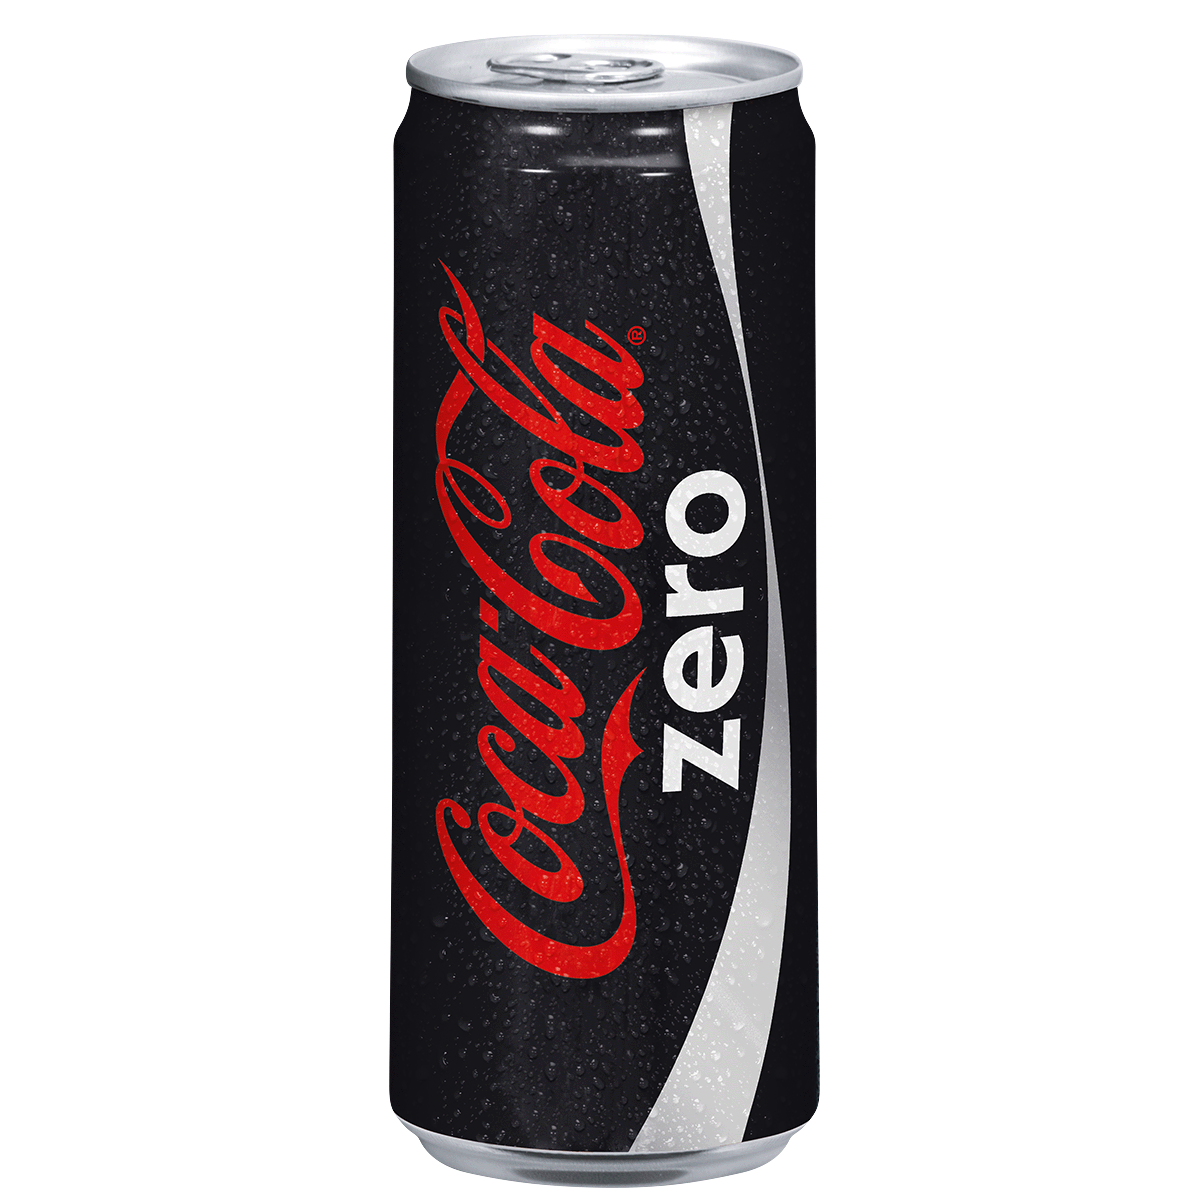 Coca Cola Zero 0.33. Кока кола Зеро 0.33 банка. Coca Cola Zero напиток. • Напитки Coca-Cola Zero /Кока-кола Зеро. E 0 33